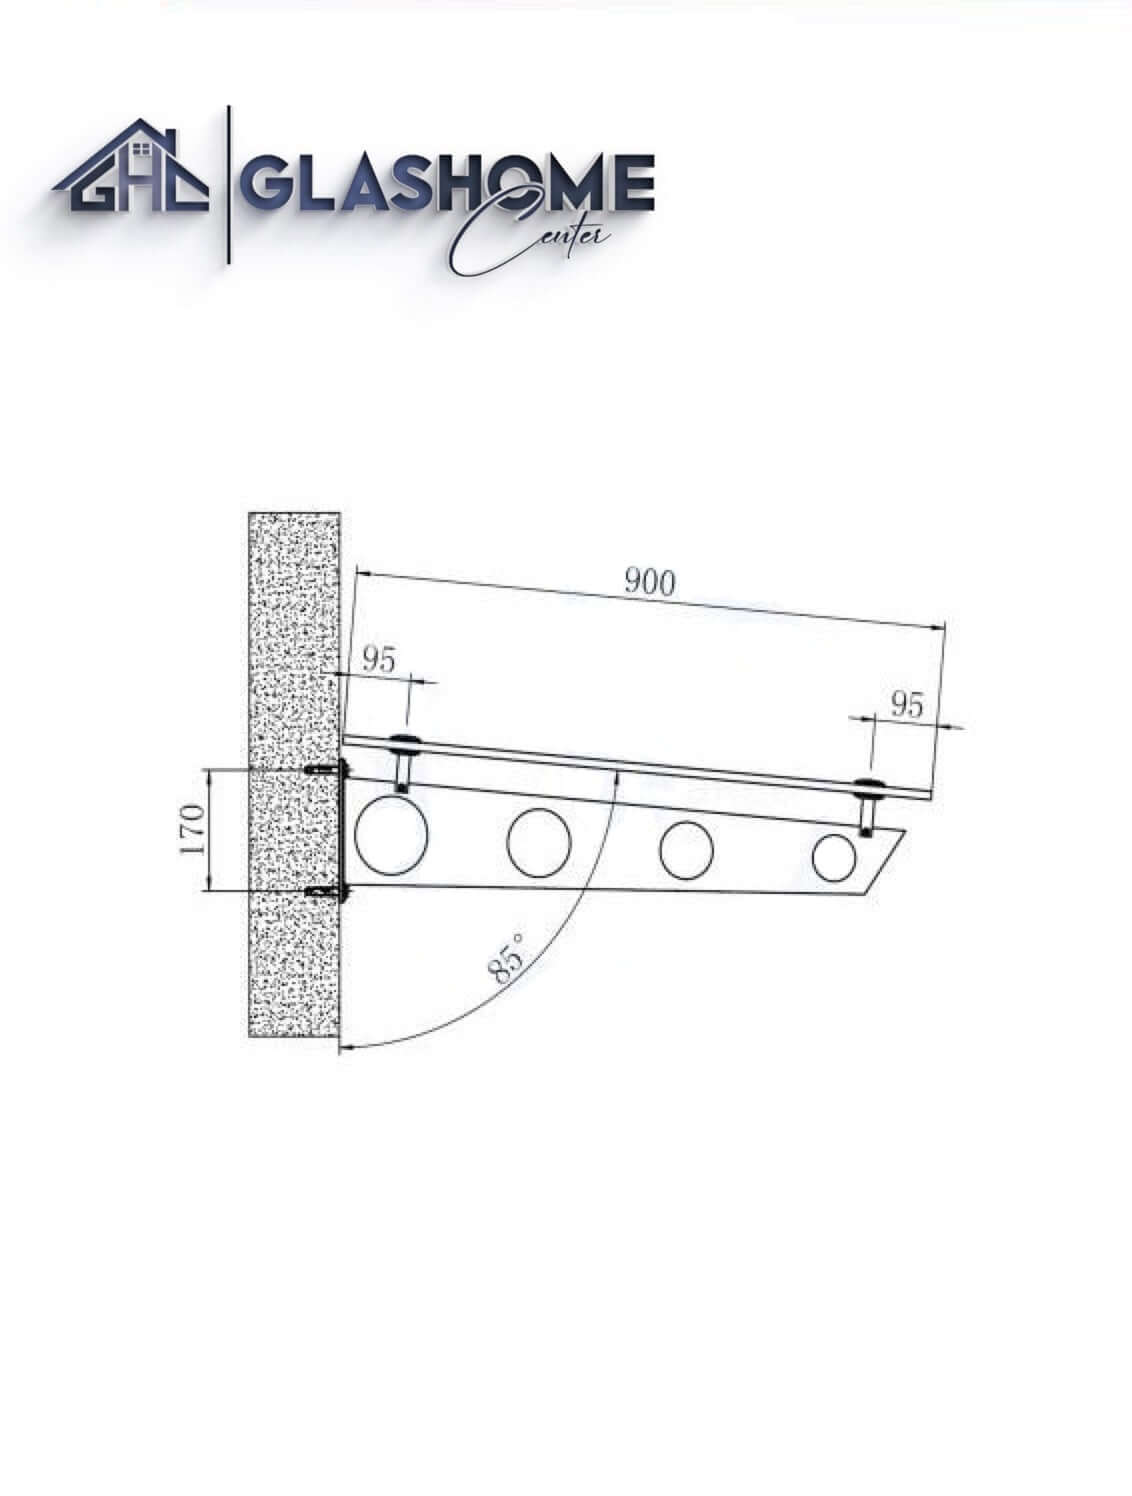 GlasHomeCenter - glass canopy - Clear glass - 150x90cm - 13.1mm VSG - incl. 2 Edelstahlhalterungen Variant "Stockholm"